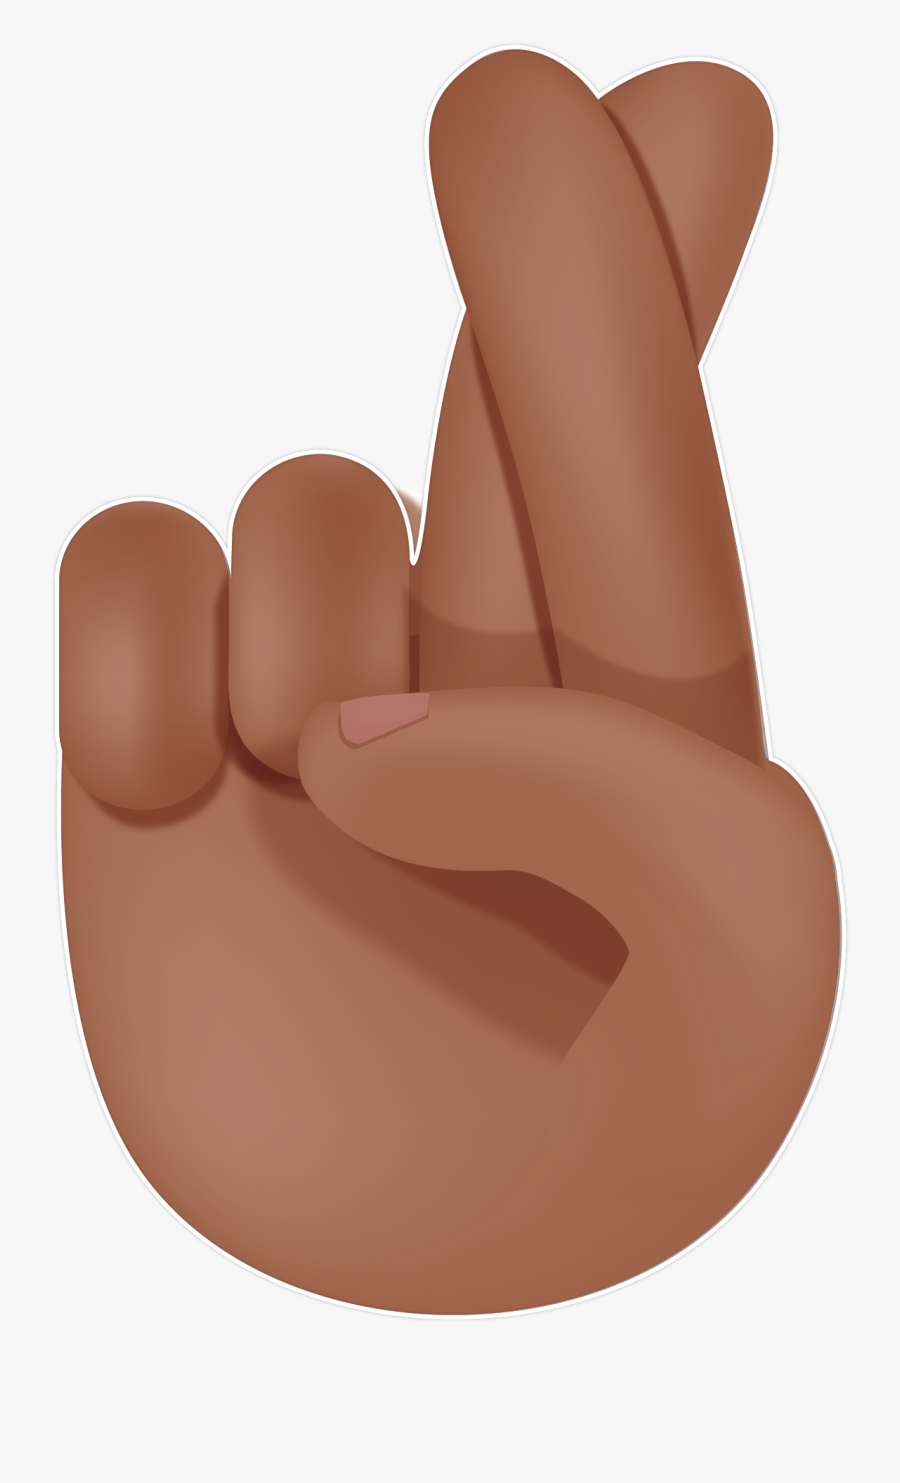 Two Fingers Crossed Emoji, Transparent Clipart